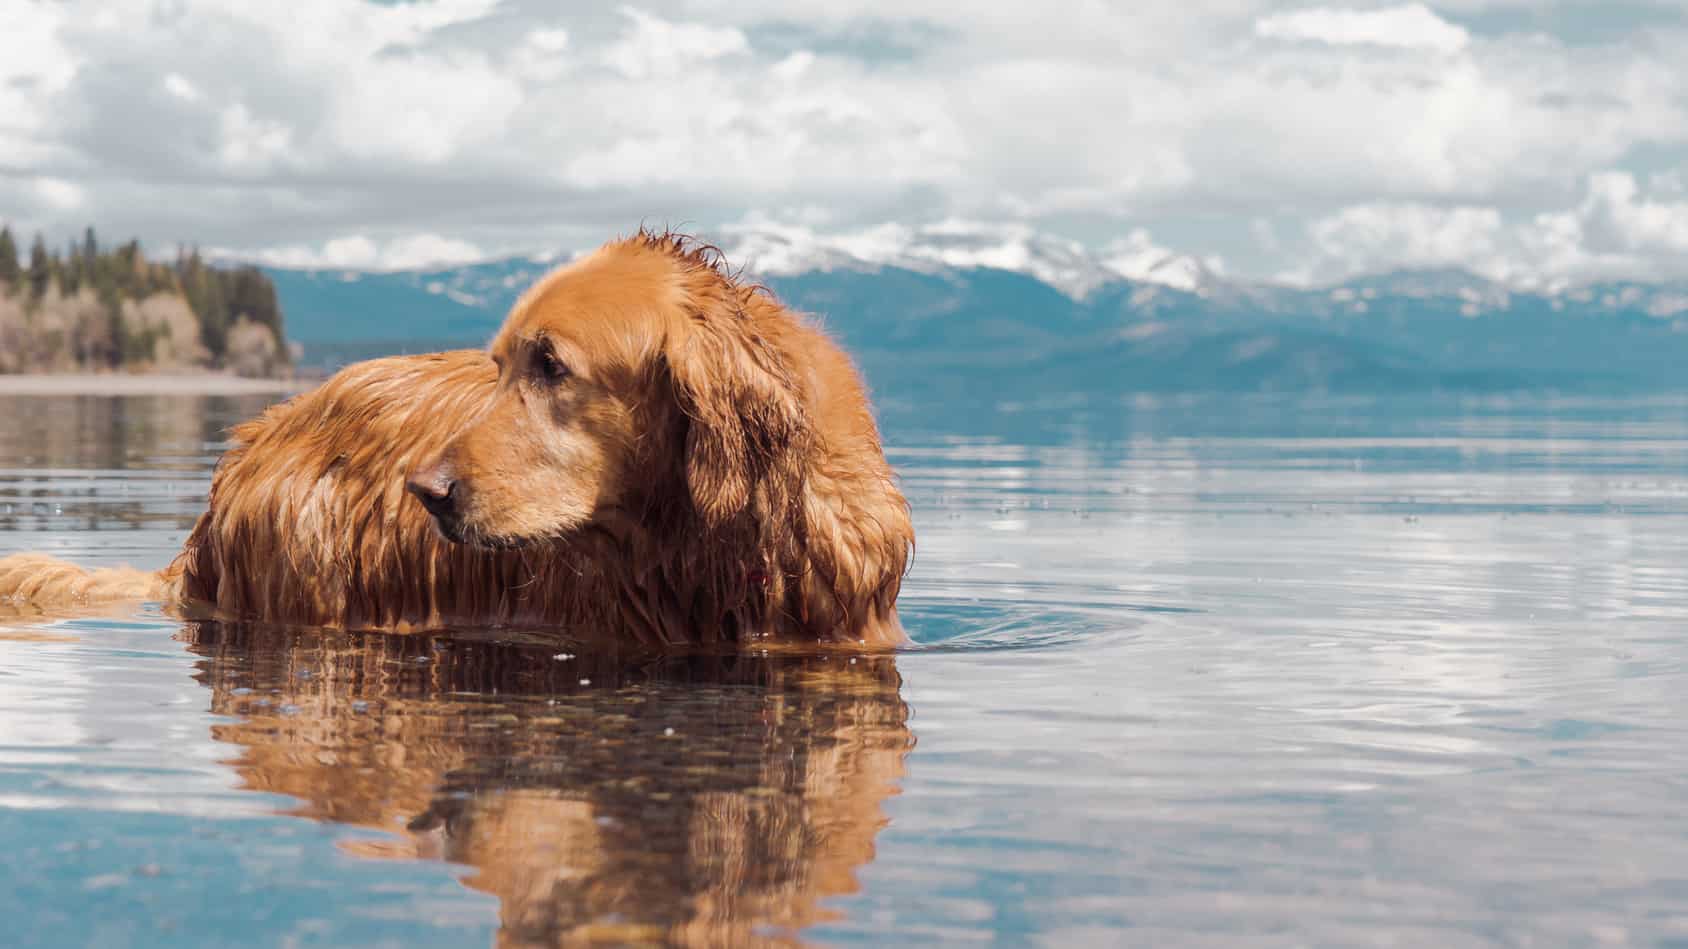 A golden retriever swims in Lake Tahoe